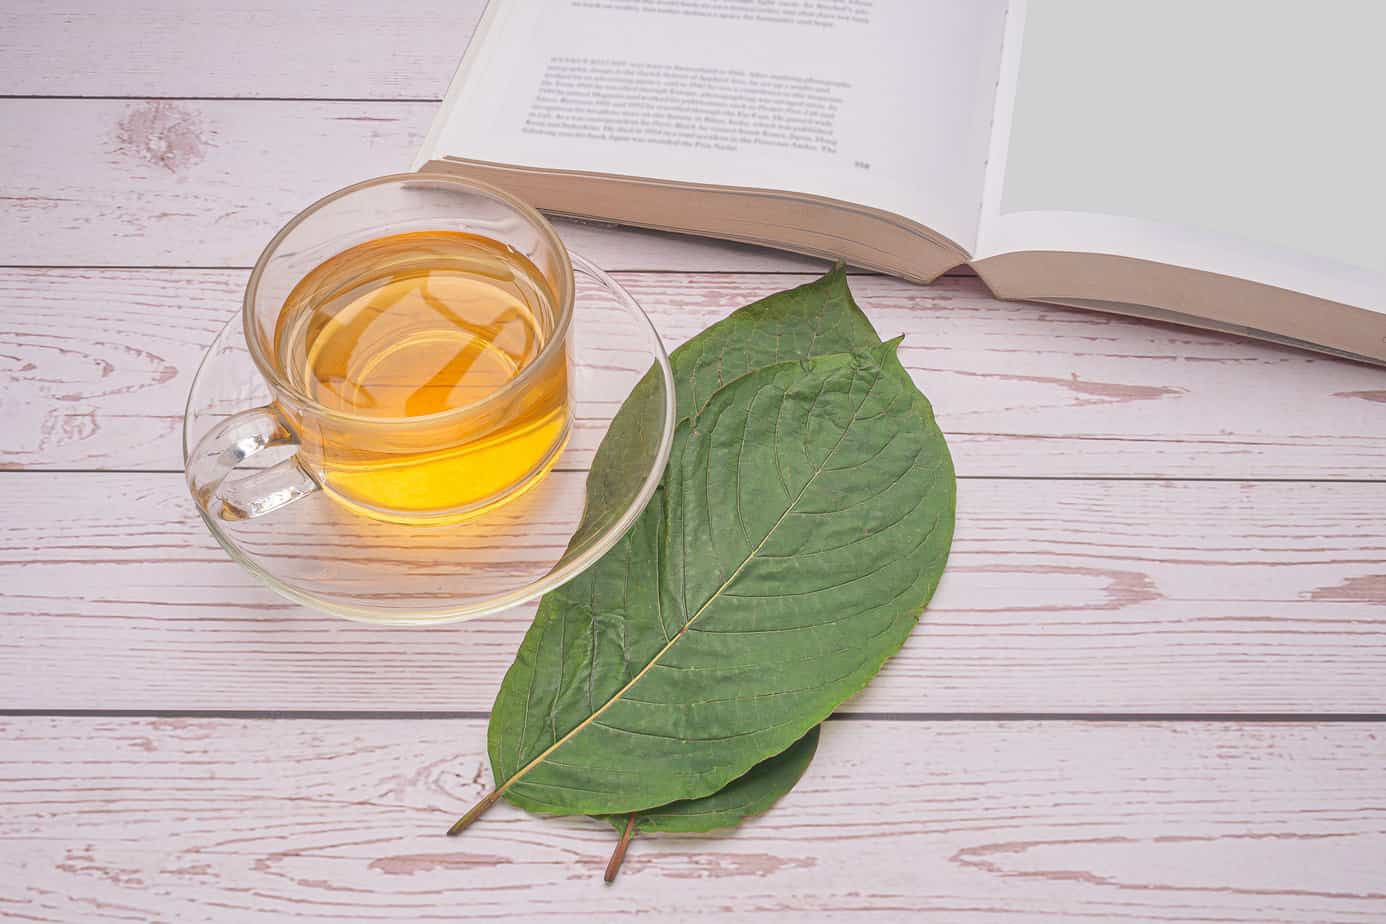 kratom leaves being used in tea next to book on table